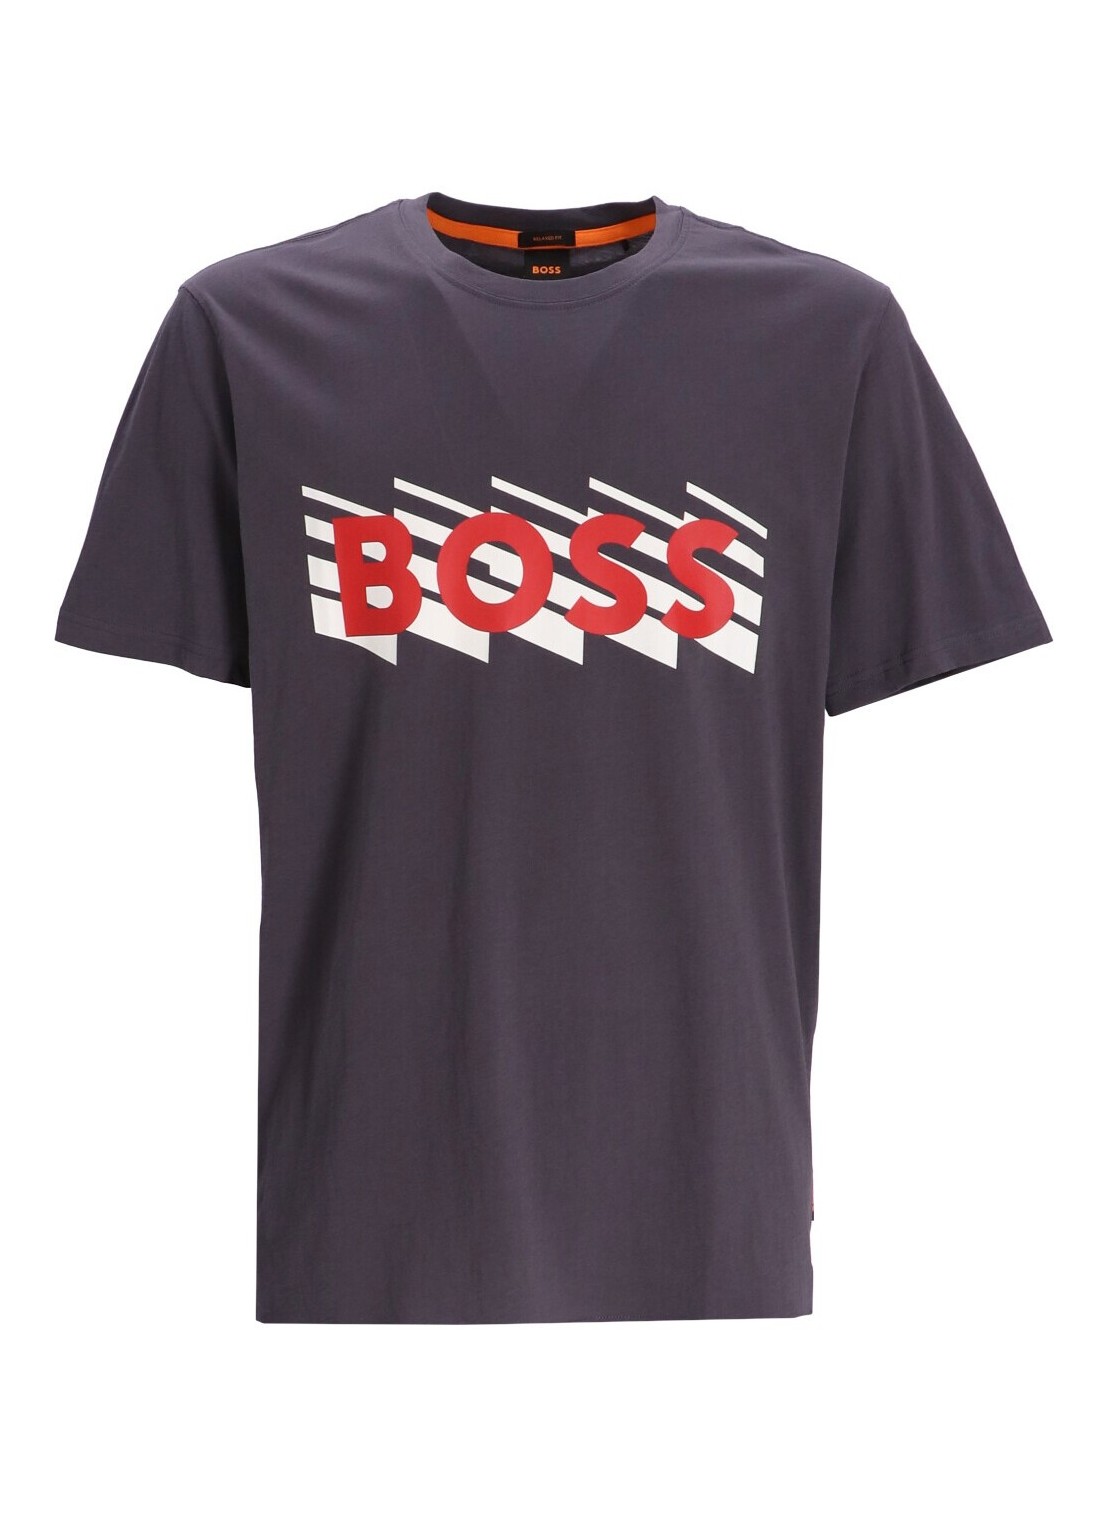 Camiseta boss t-shirt man teebossrete 50495719 022 talla gris
 